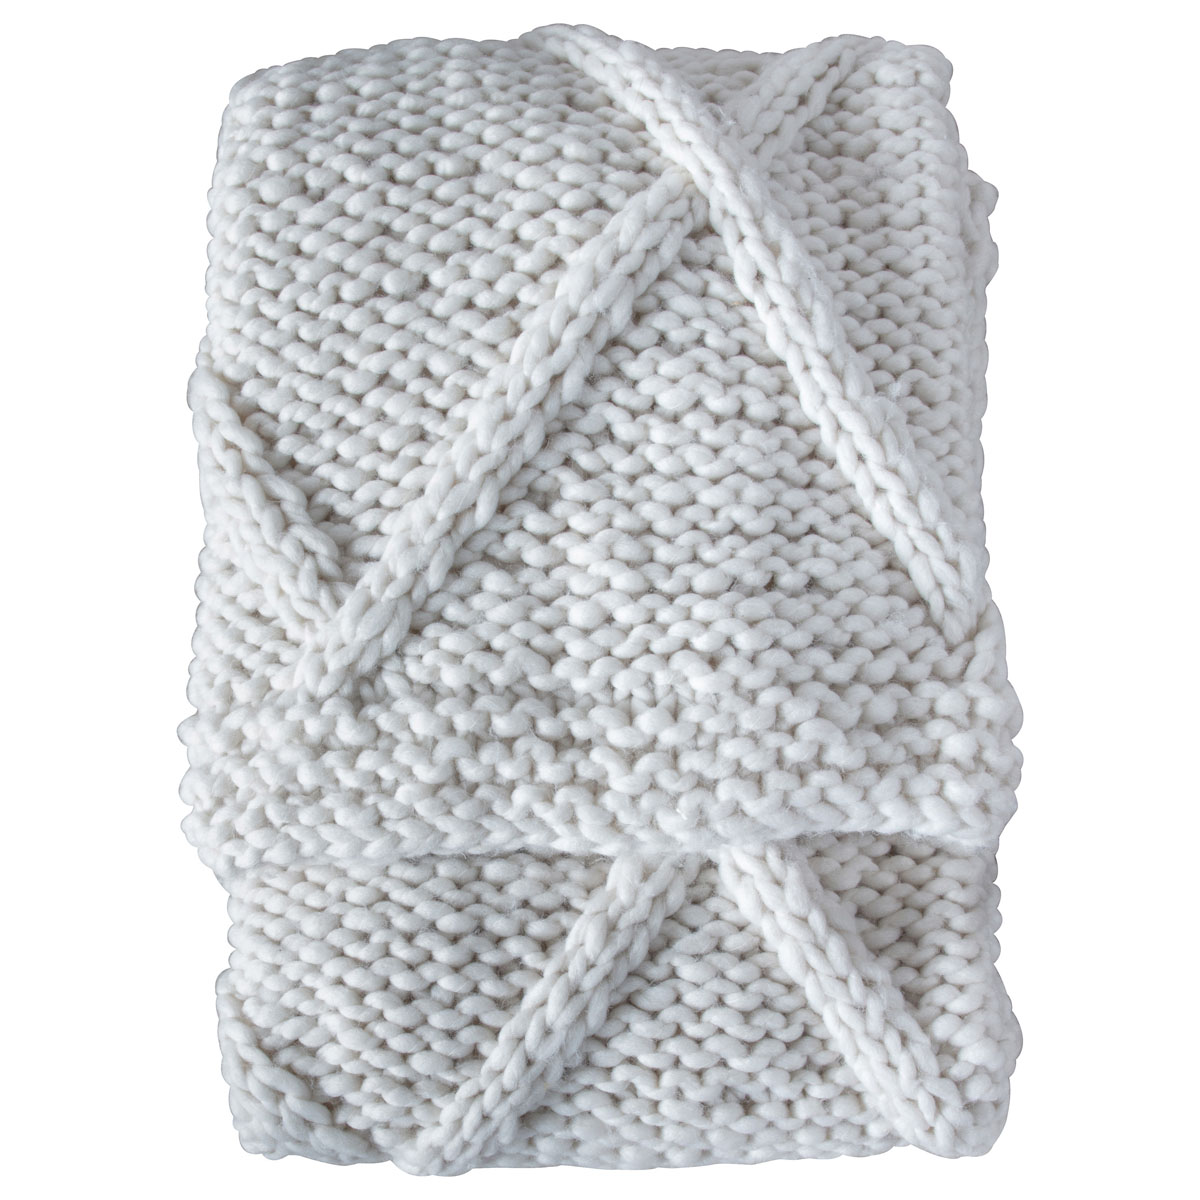 Cable Knit Diamond Throw Cream 1300x1700mm